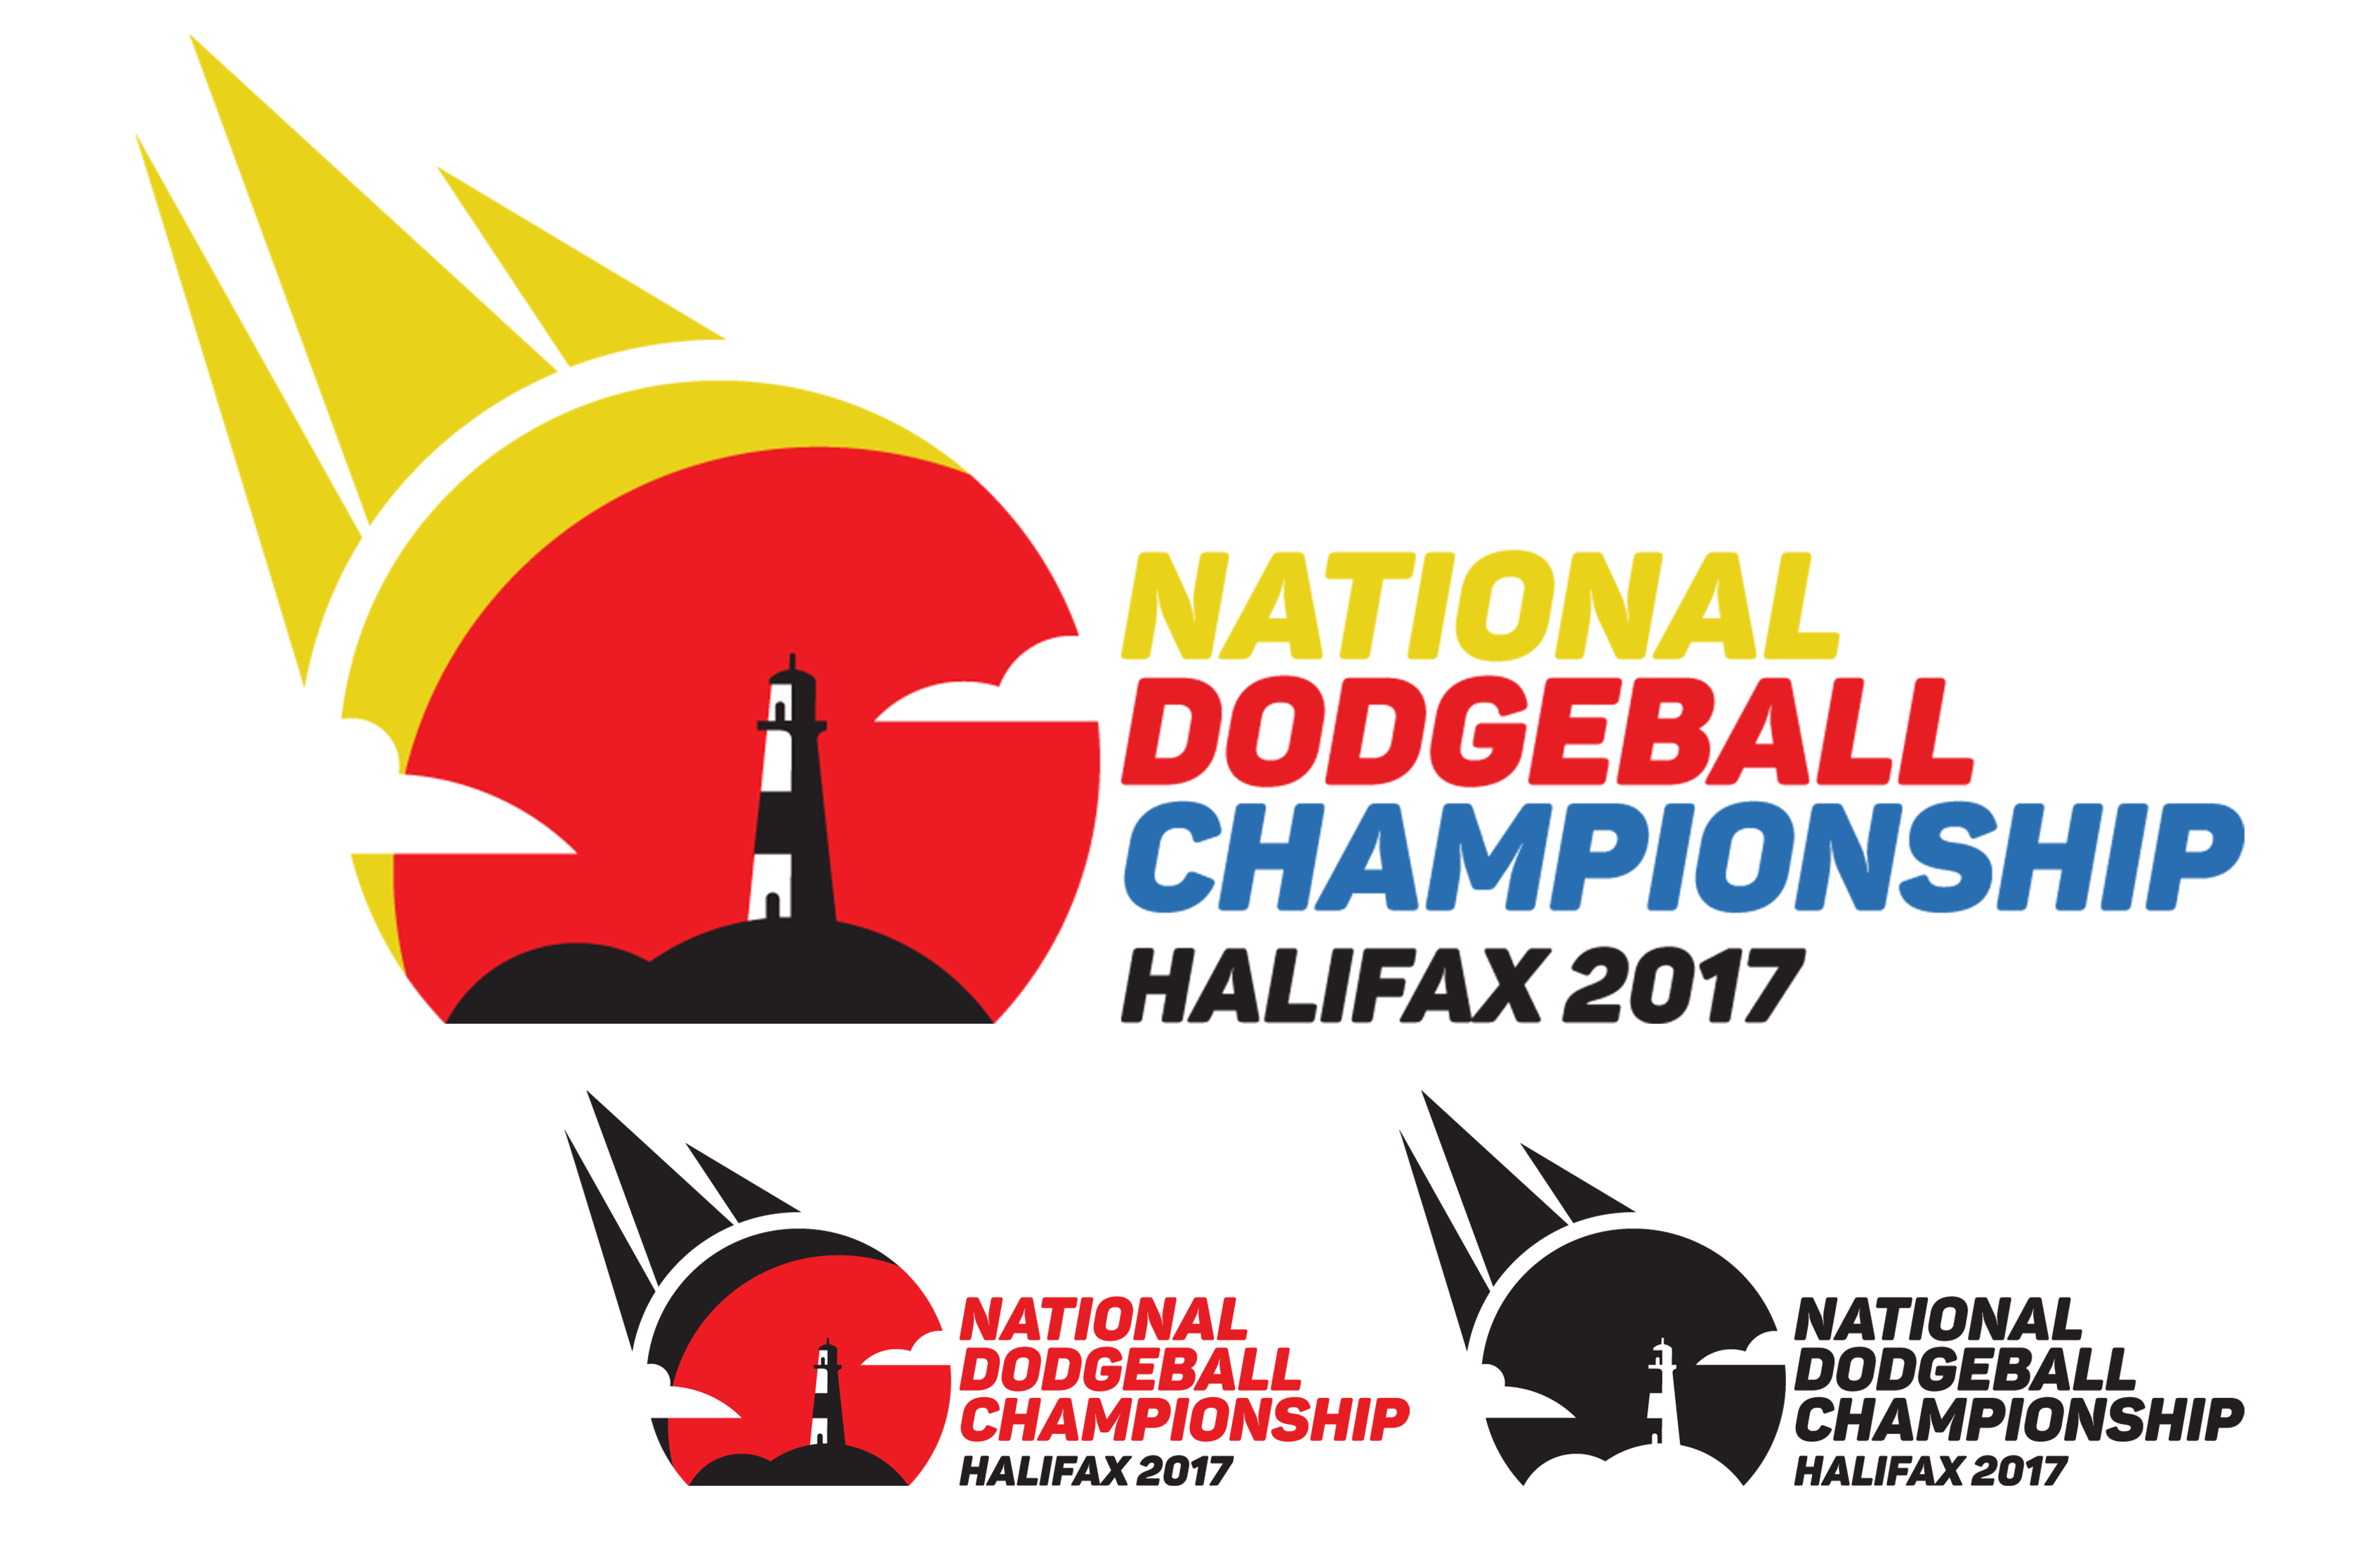 National Dodgeball Championship Halifax 2017